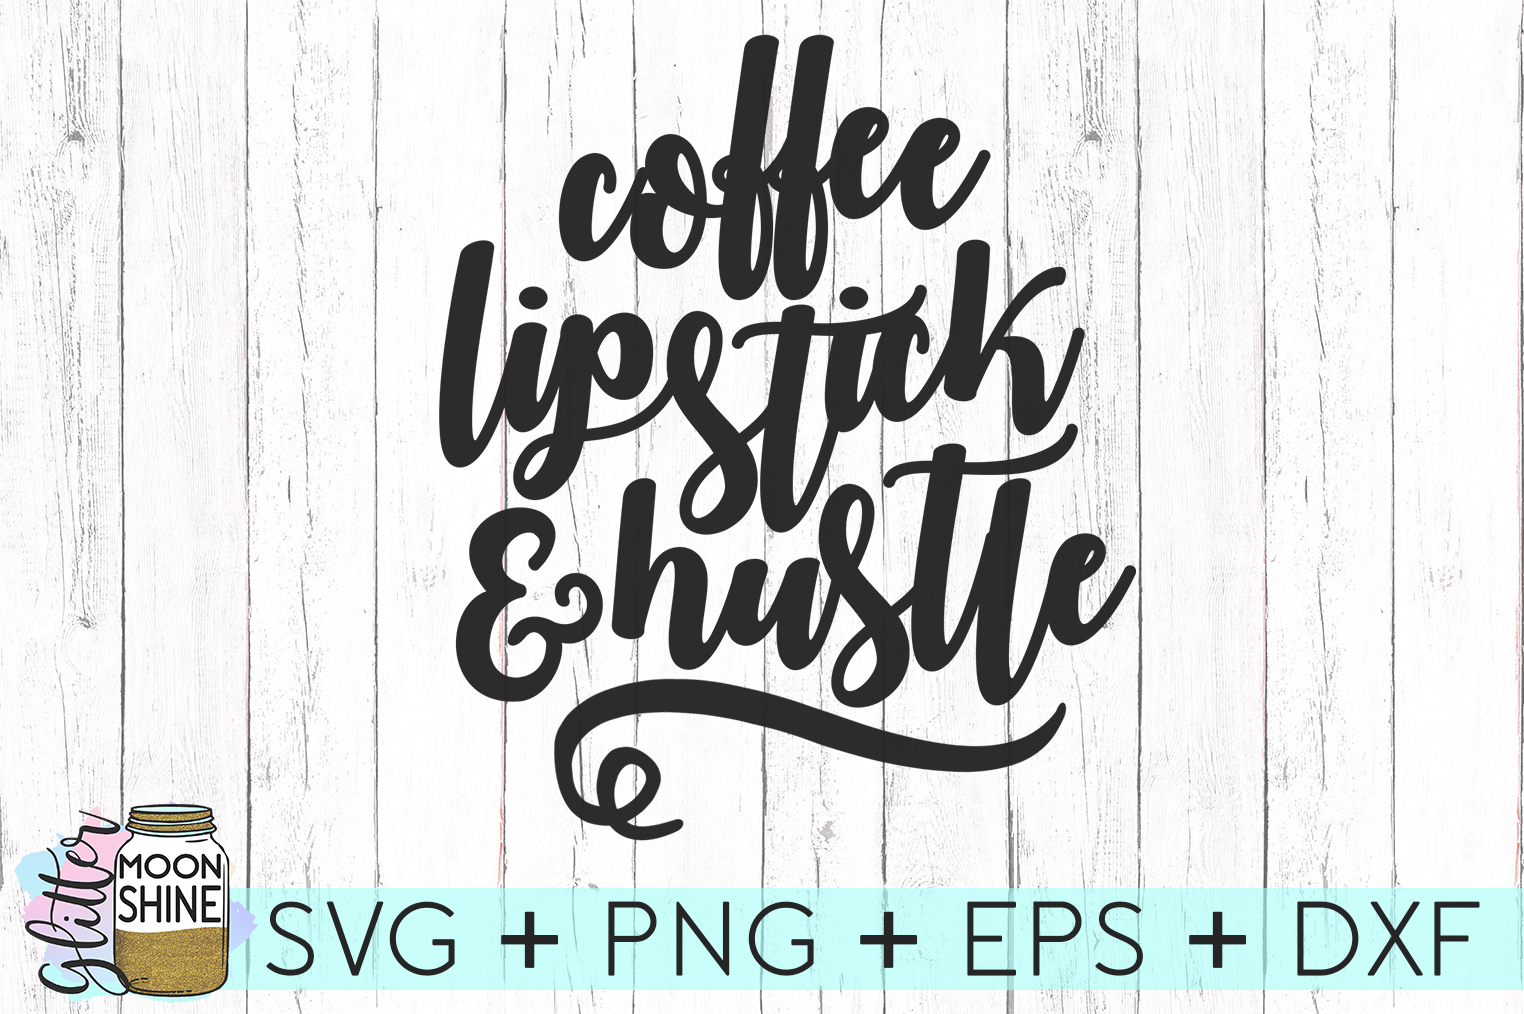 Free Free 183 Coffee Mascara Hustle Svg SVG PNG EPS DXF File